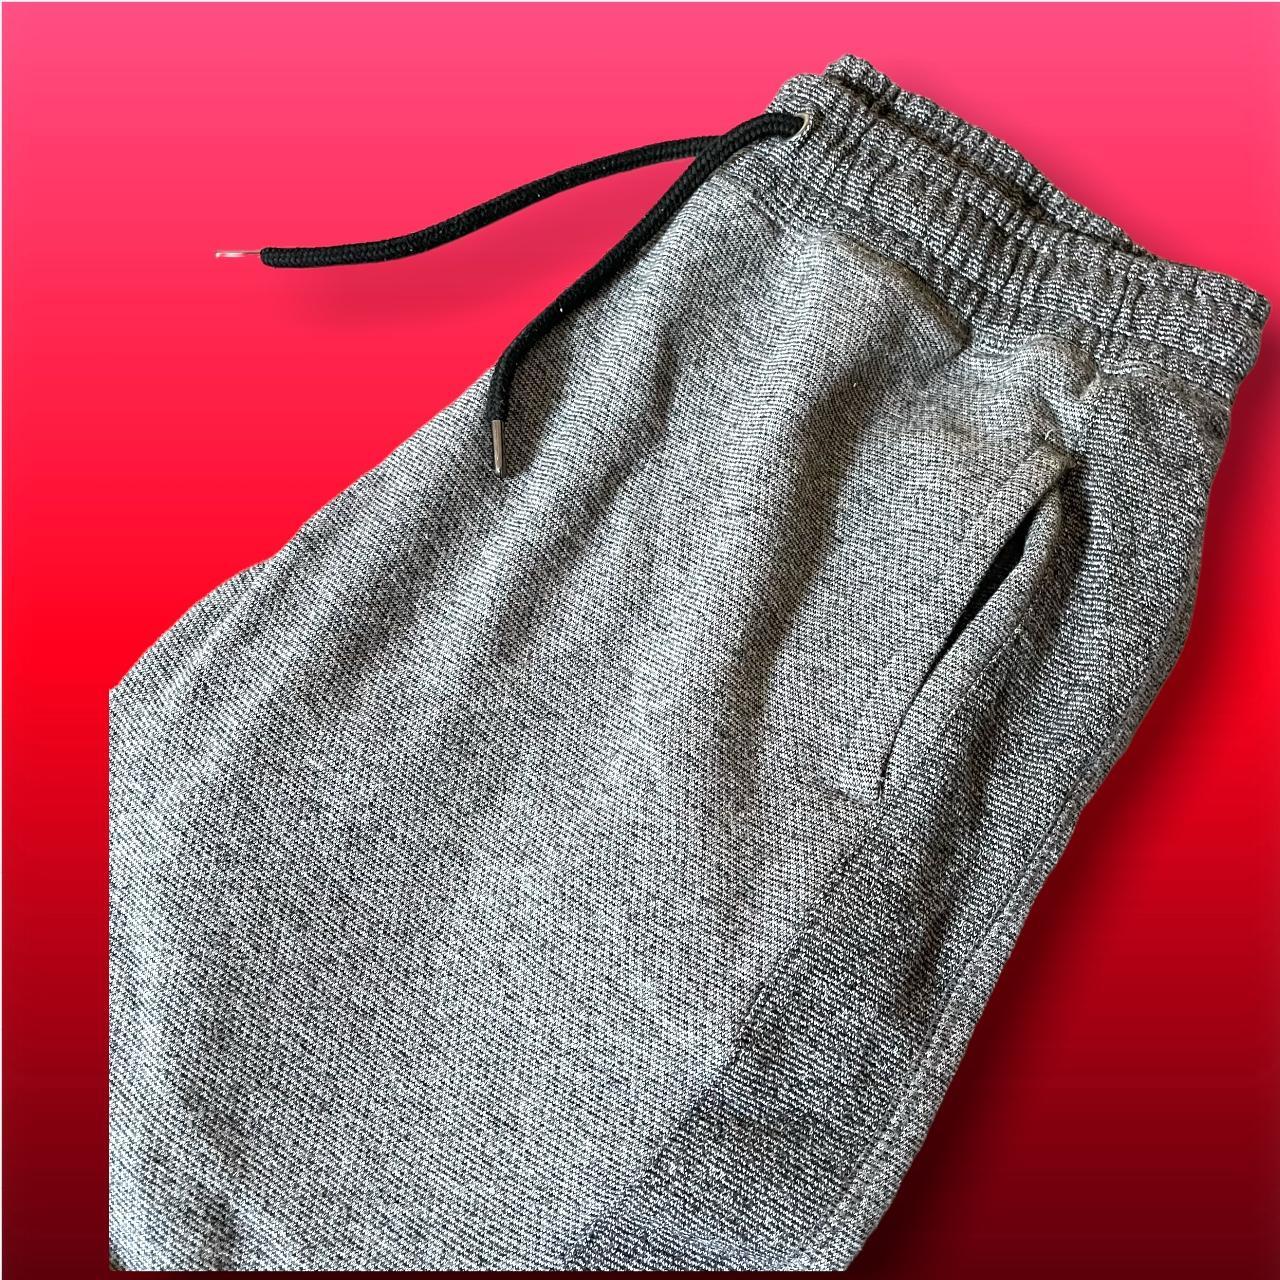 Product Image 2 - Marled Gray Sweatpants Sz L
Topman
Drawstring